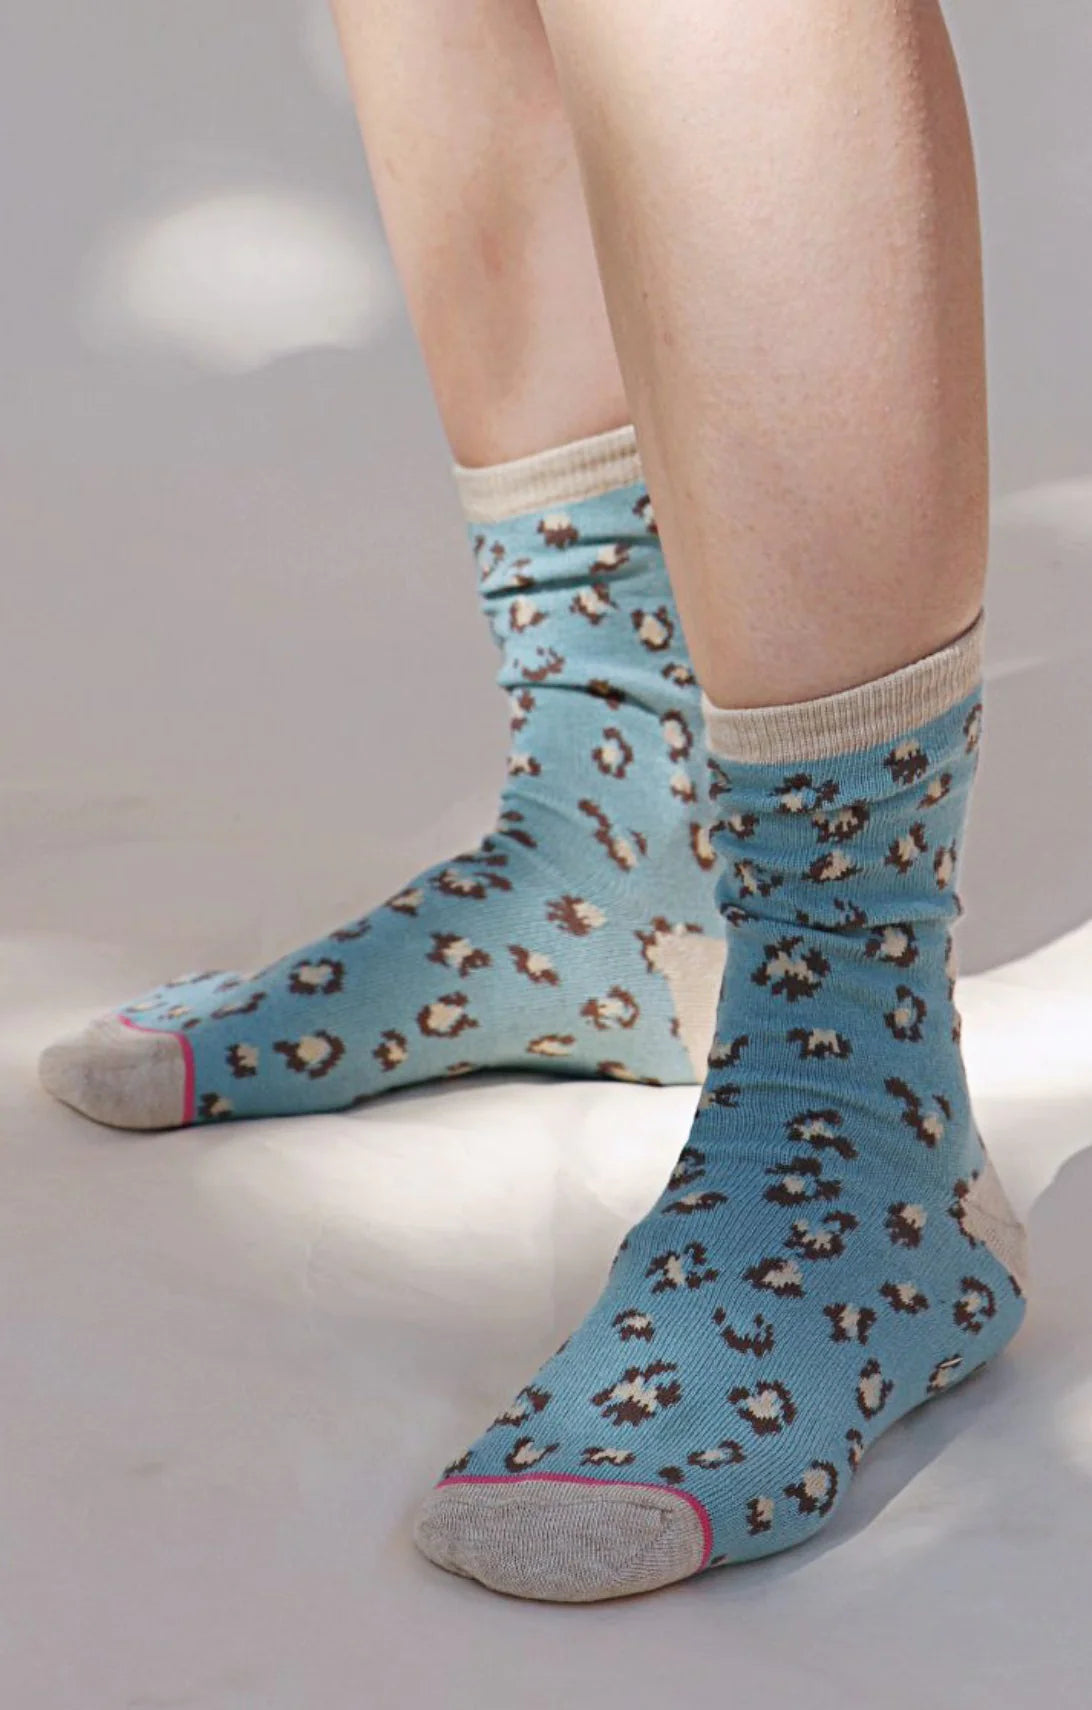 MINT colored socks named Leopard Animal Organic Cotton Crew Socks by Tabbisocks